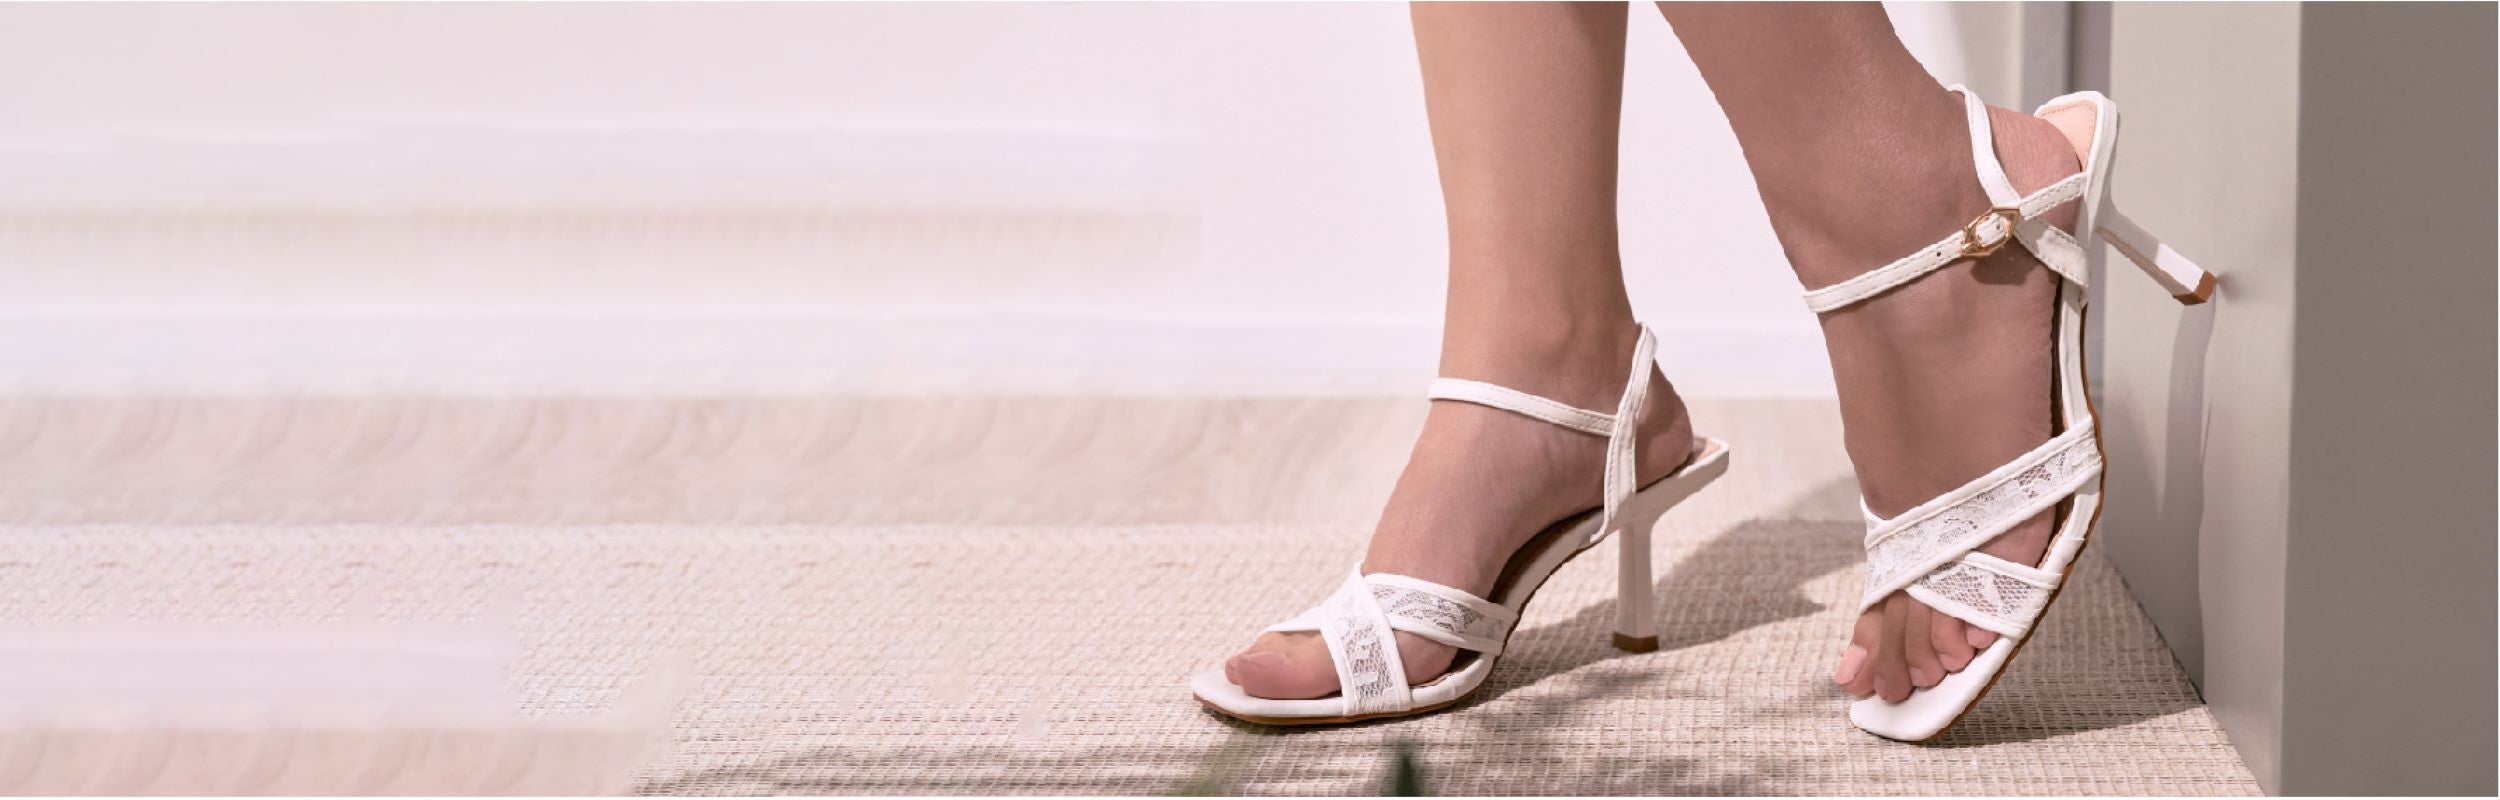 Buy Sandals With 2 Inch Heels For Women online | Lazada.com.ph